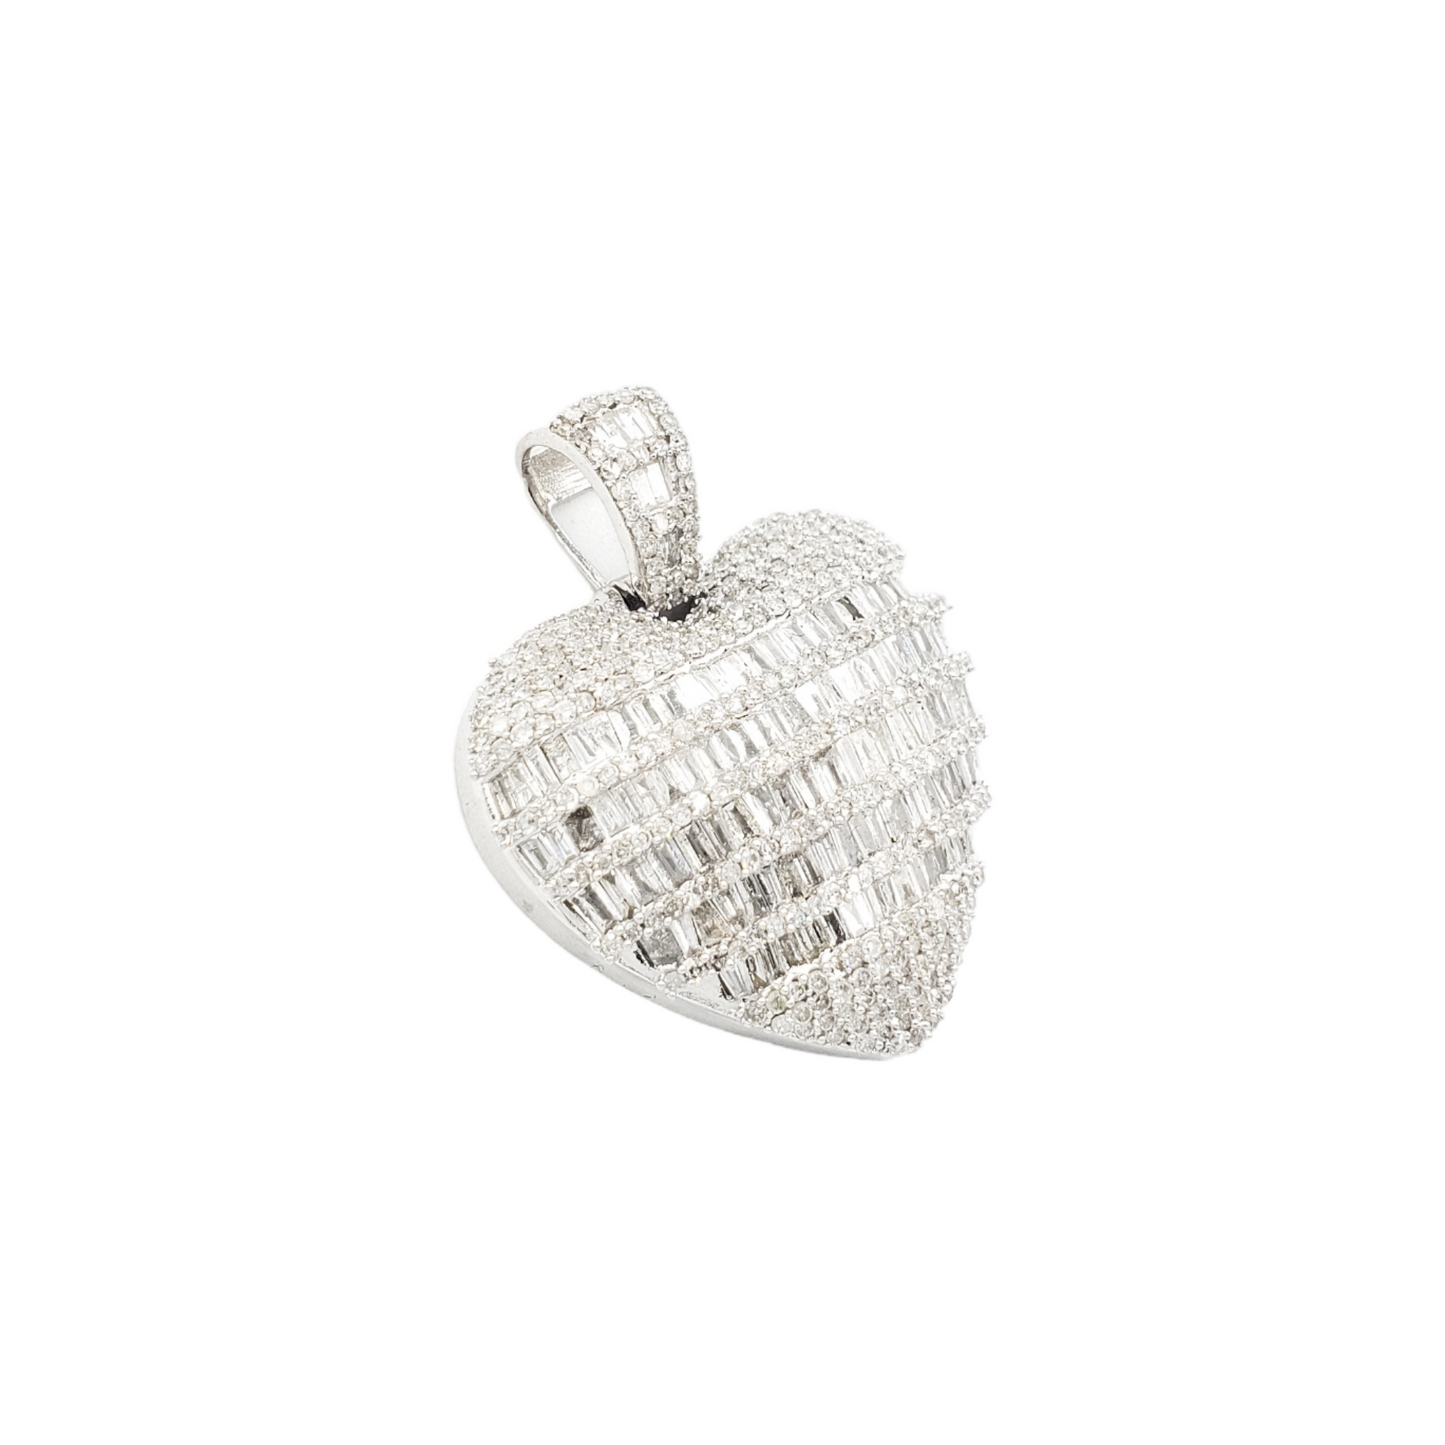 14k Baguette Diamond Heart With 2.51 Carats Of Diamonds #21701